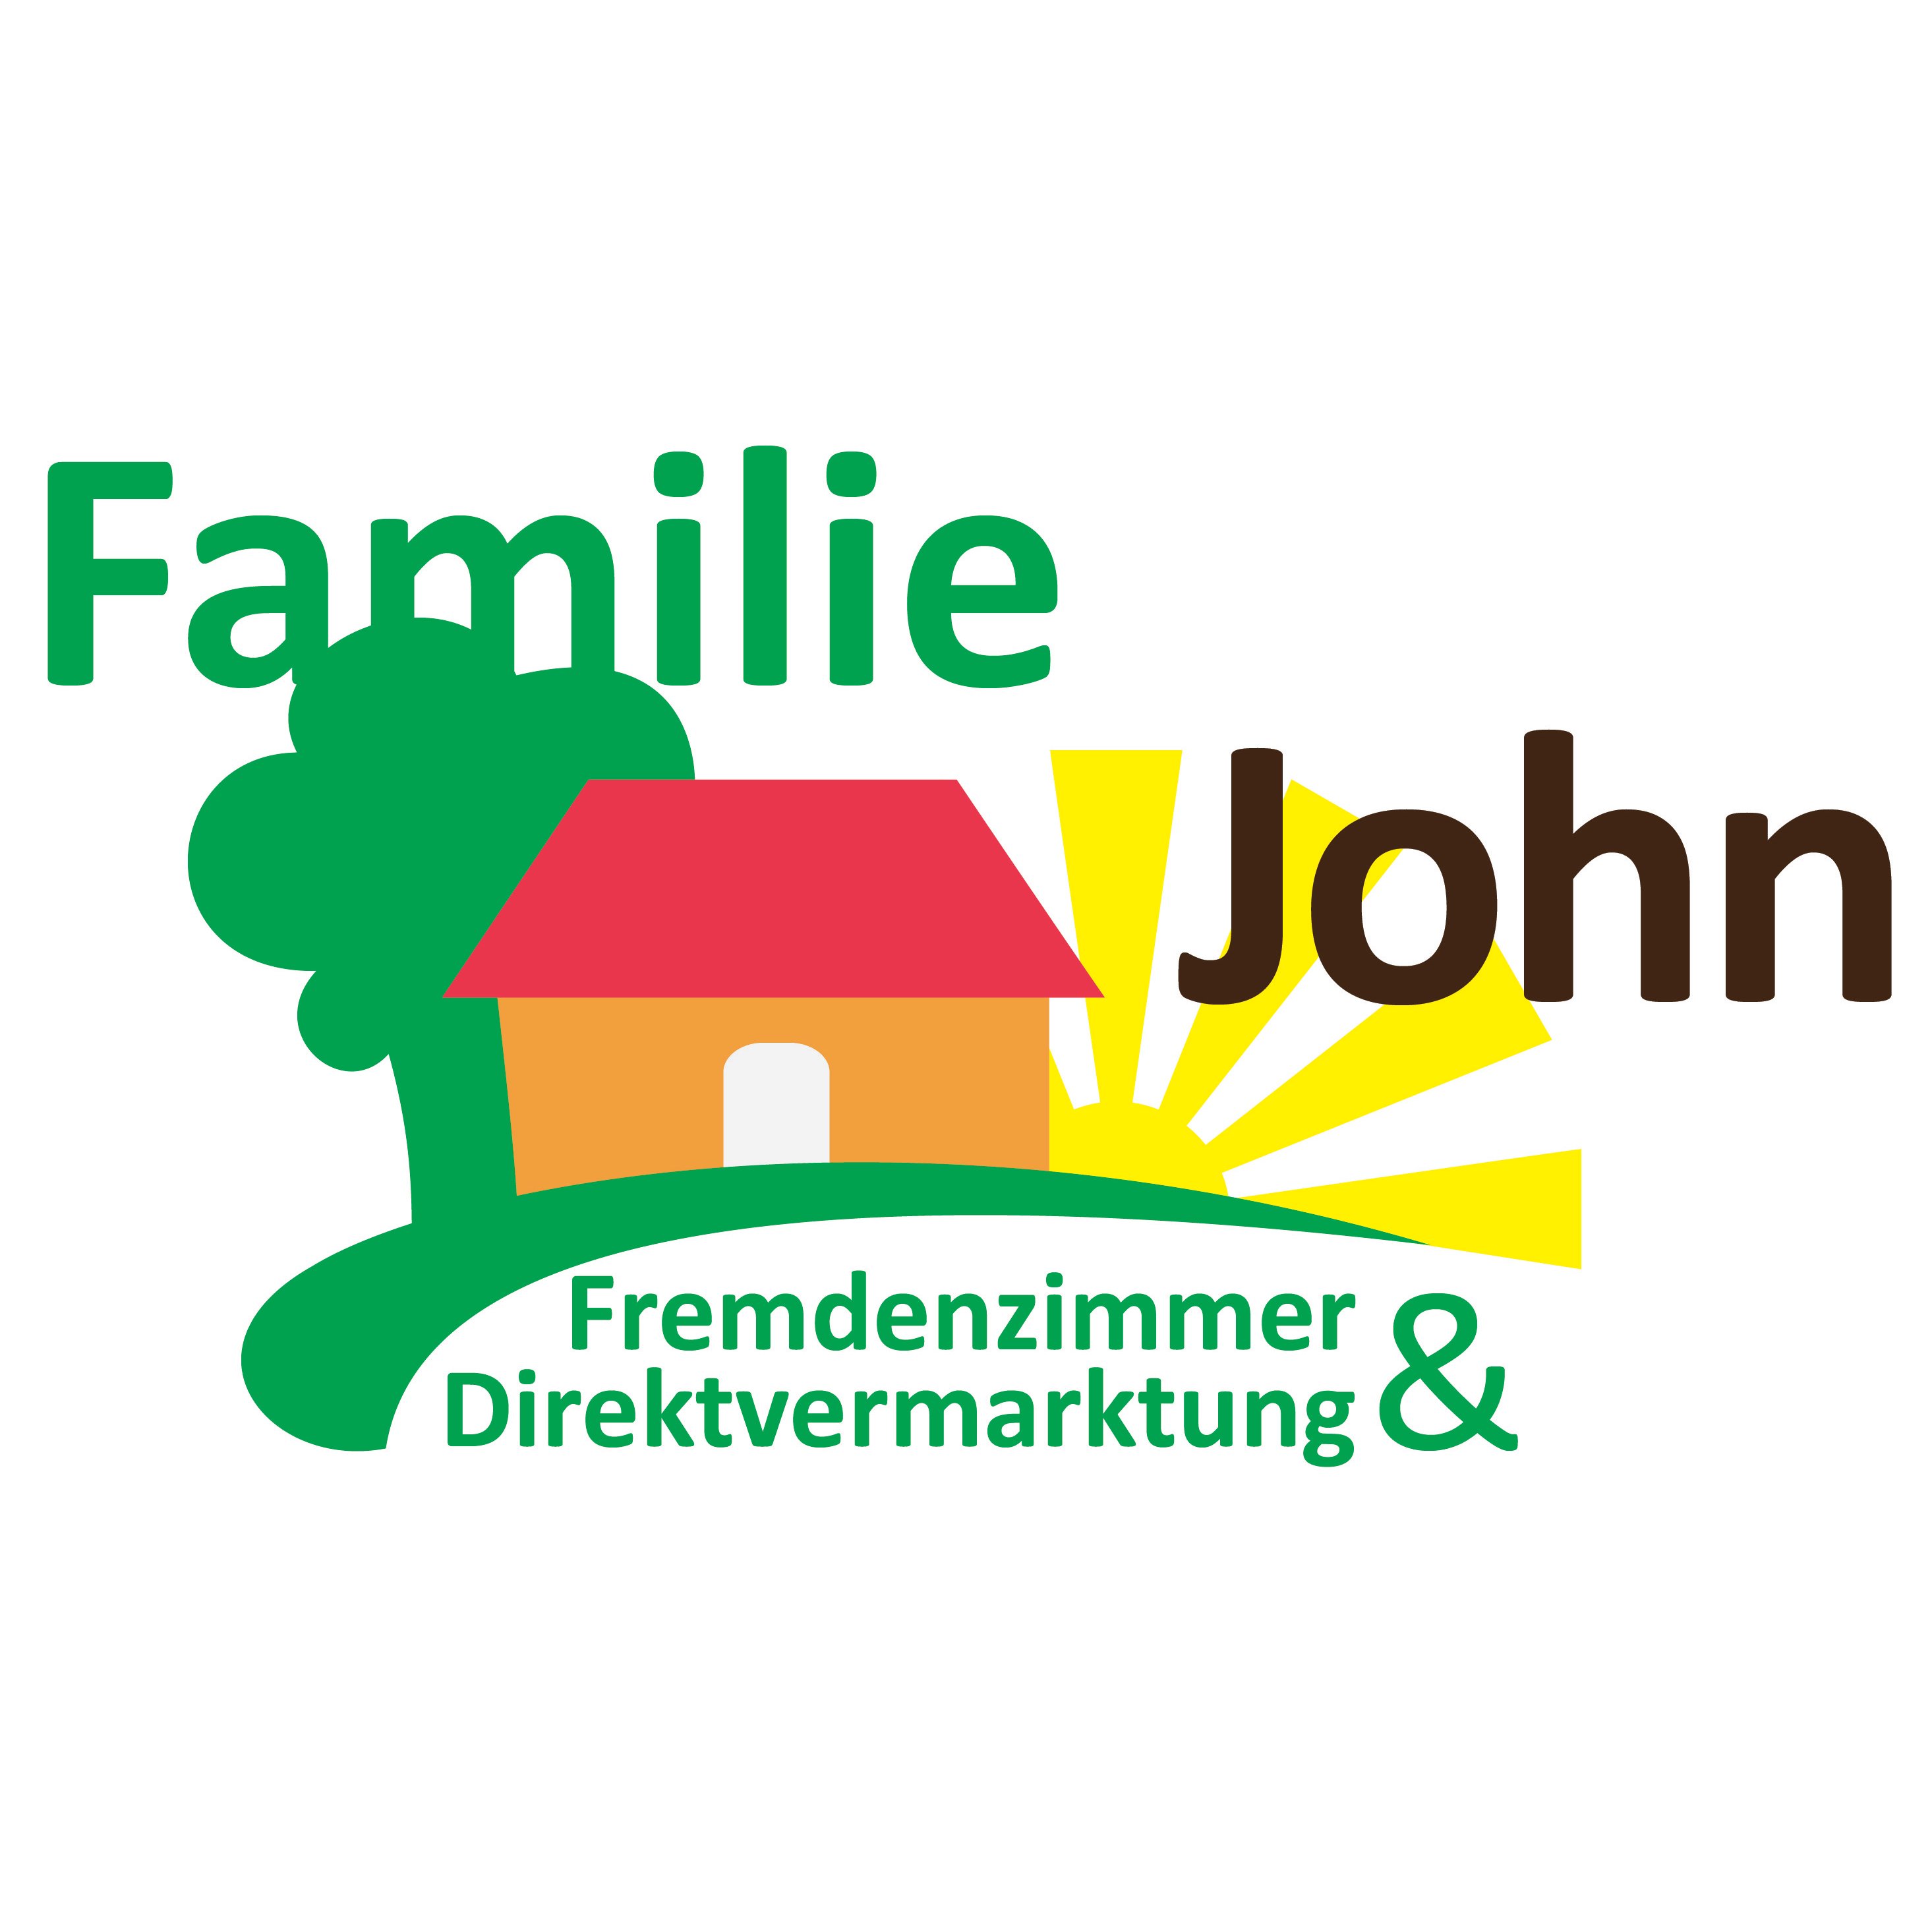 Rudolf John Gästezimmer Direktvermarktung Hofladen in Veitsbronn - Logo